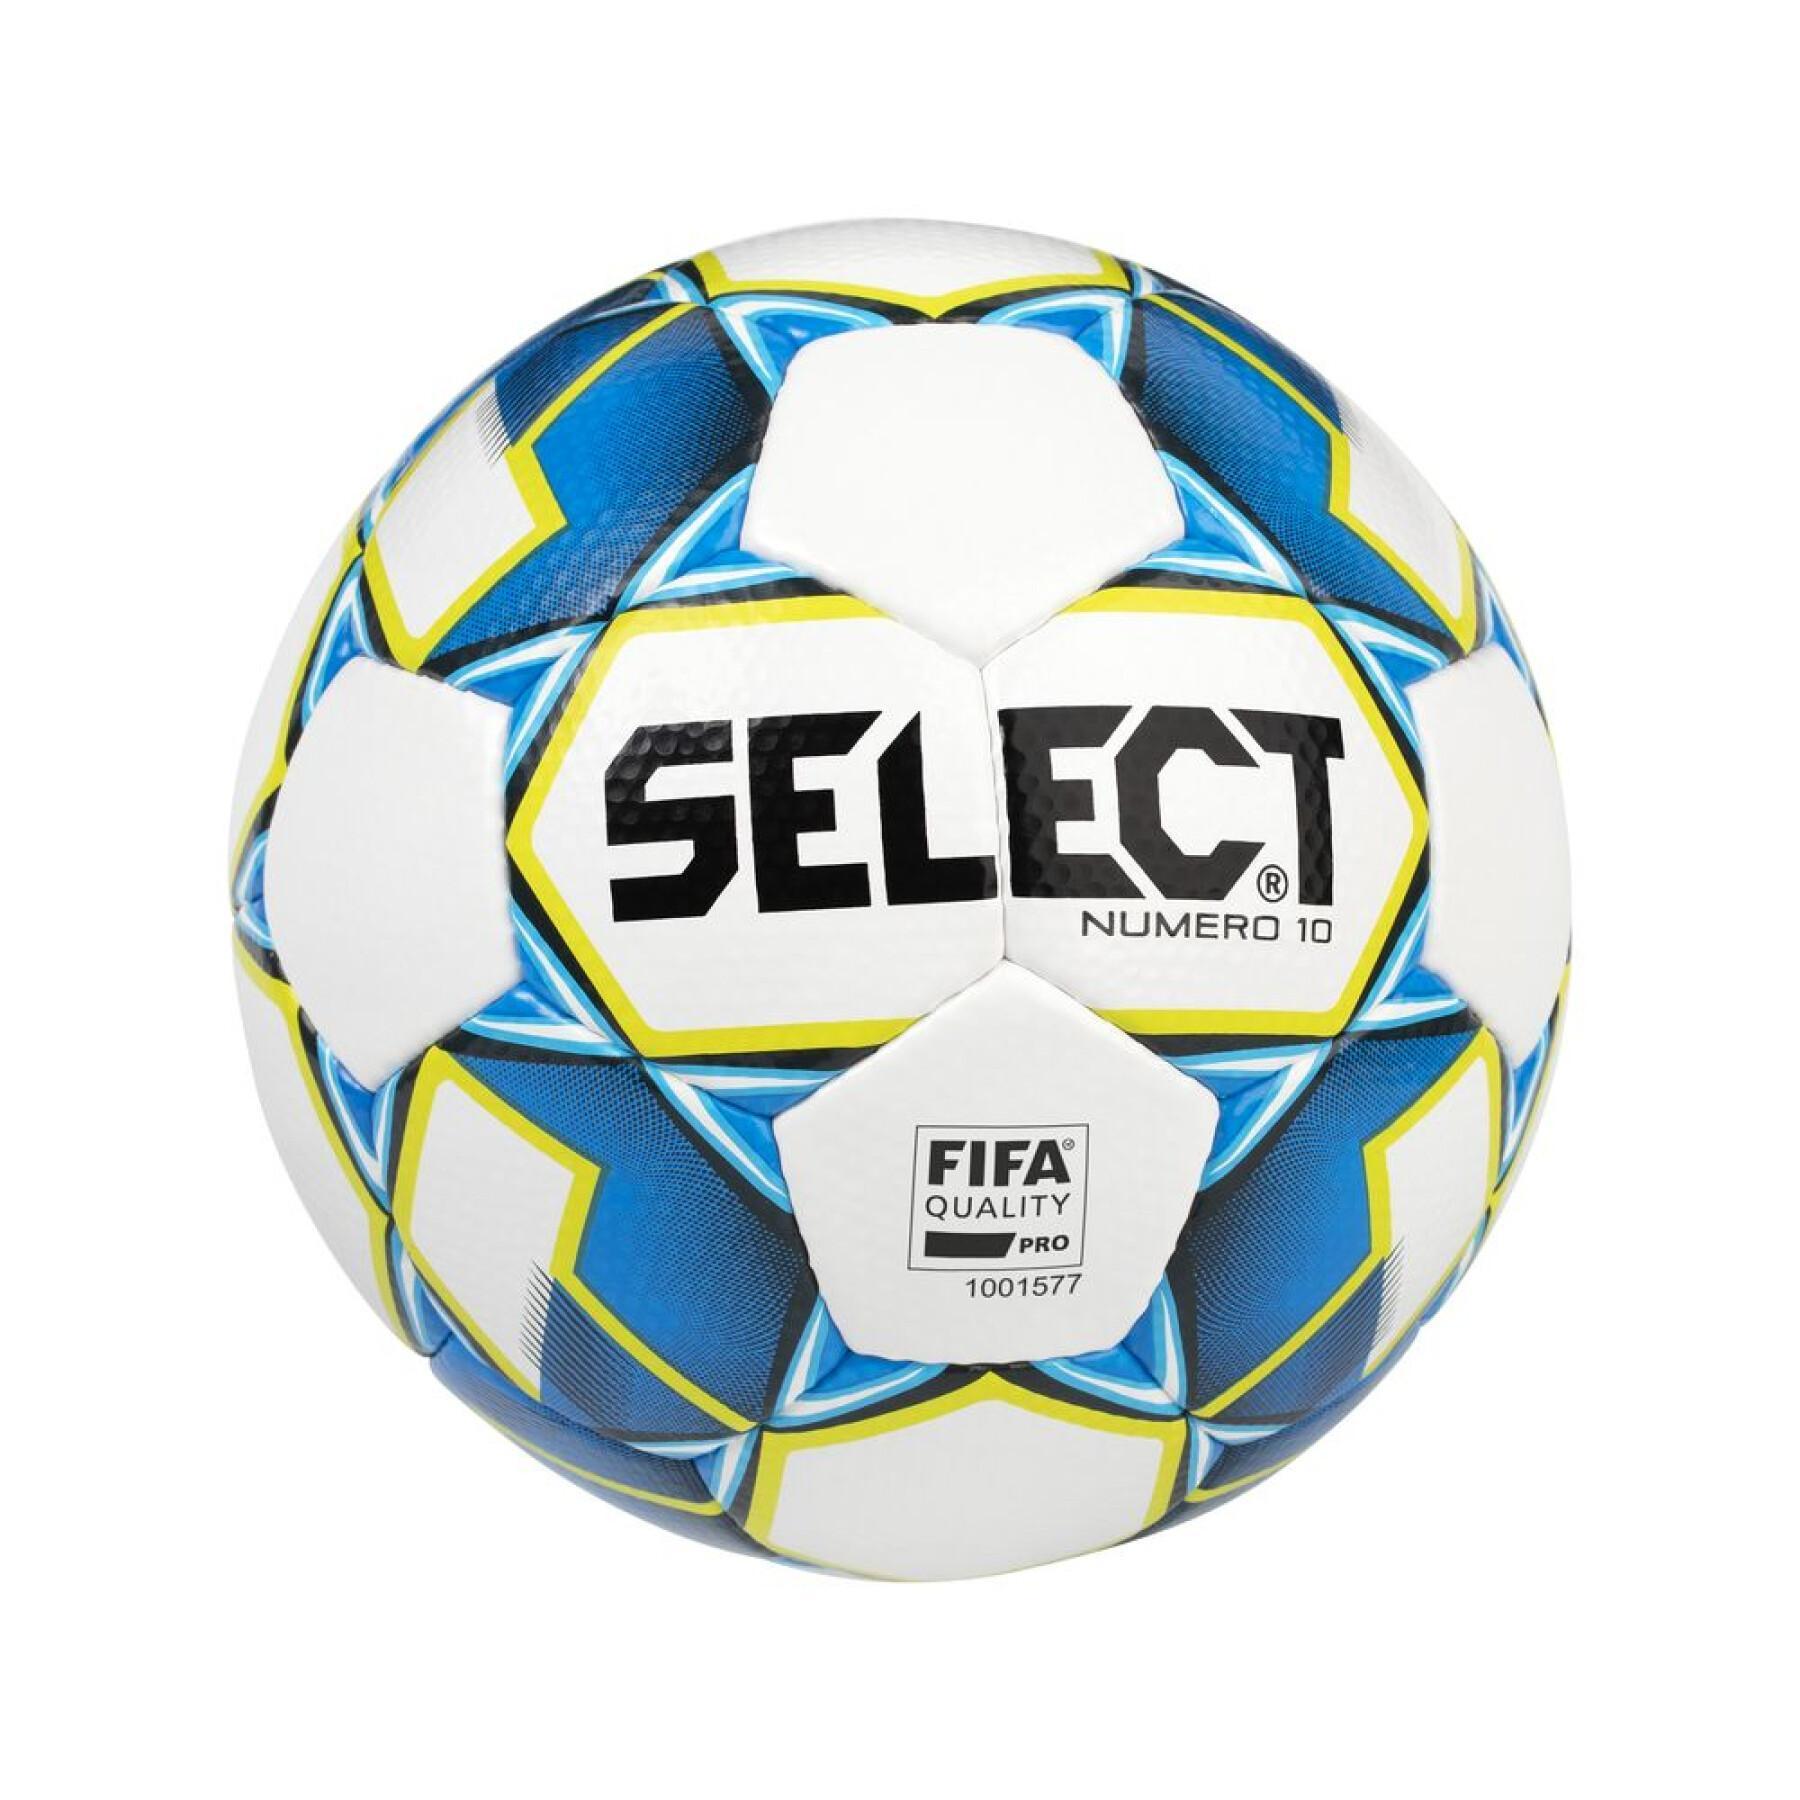 Balon Select numéro 10 FIFA